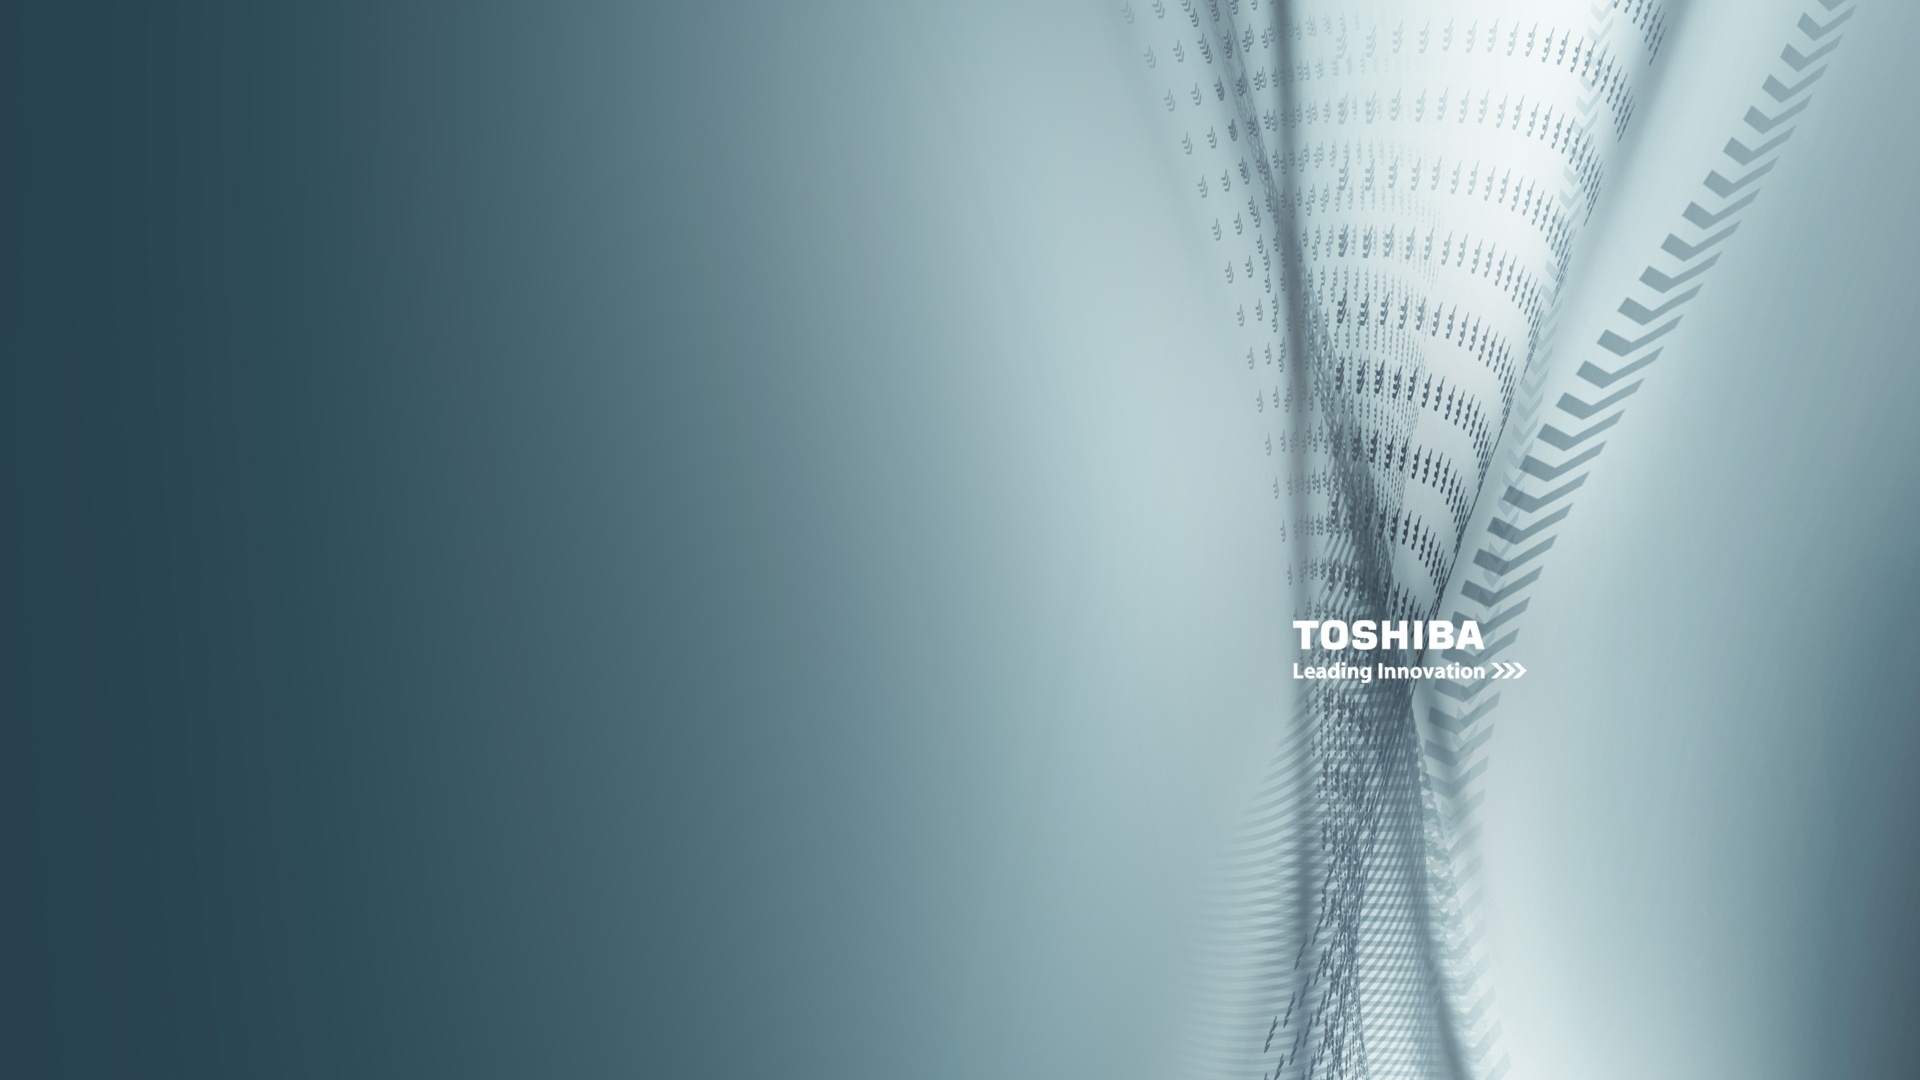 Toshiba HD Wallpaper 2015 HD Wallpapers | Genovic.com